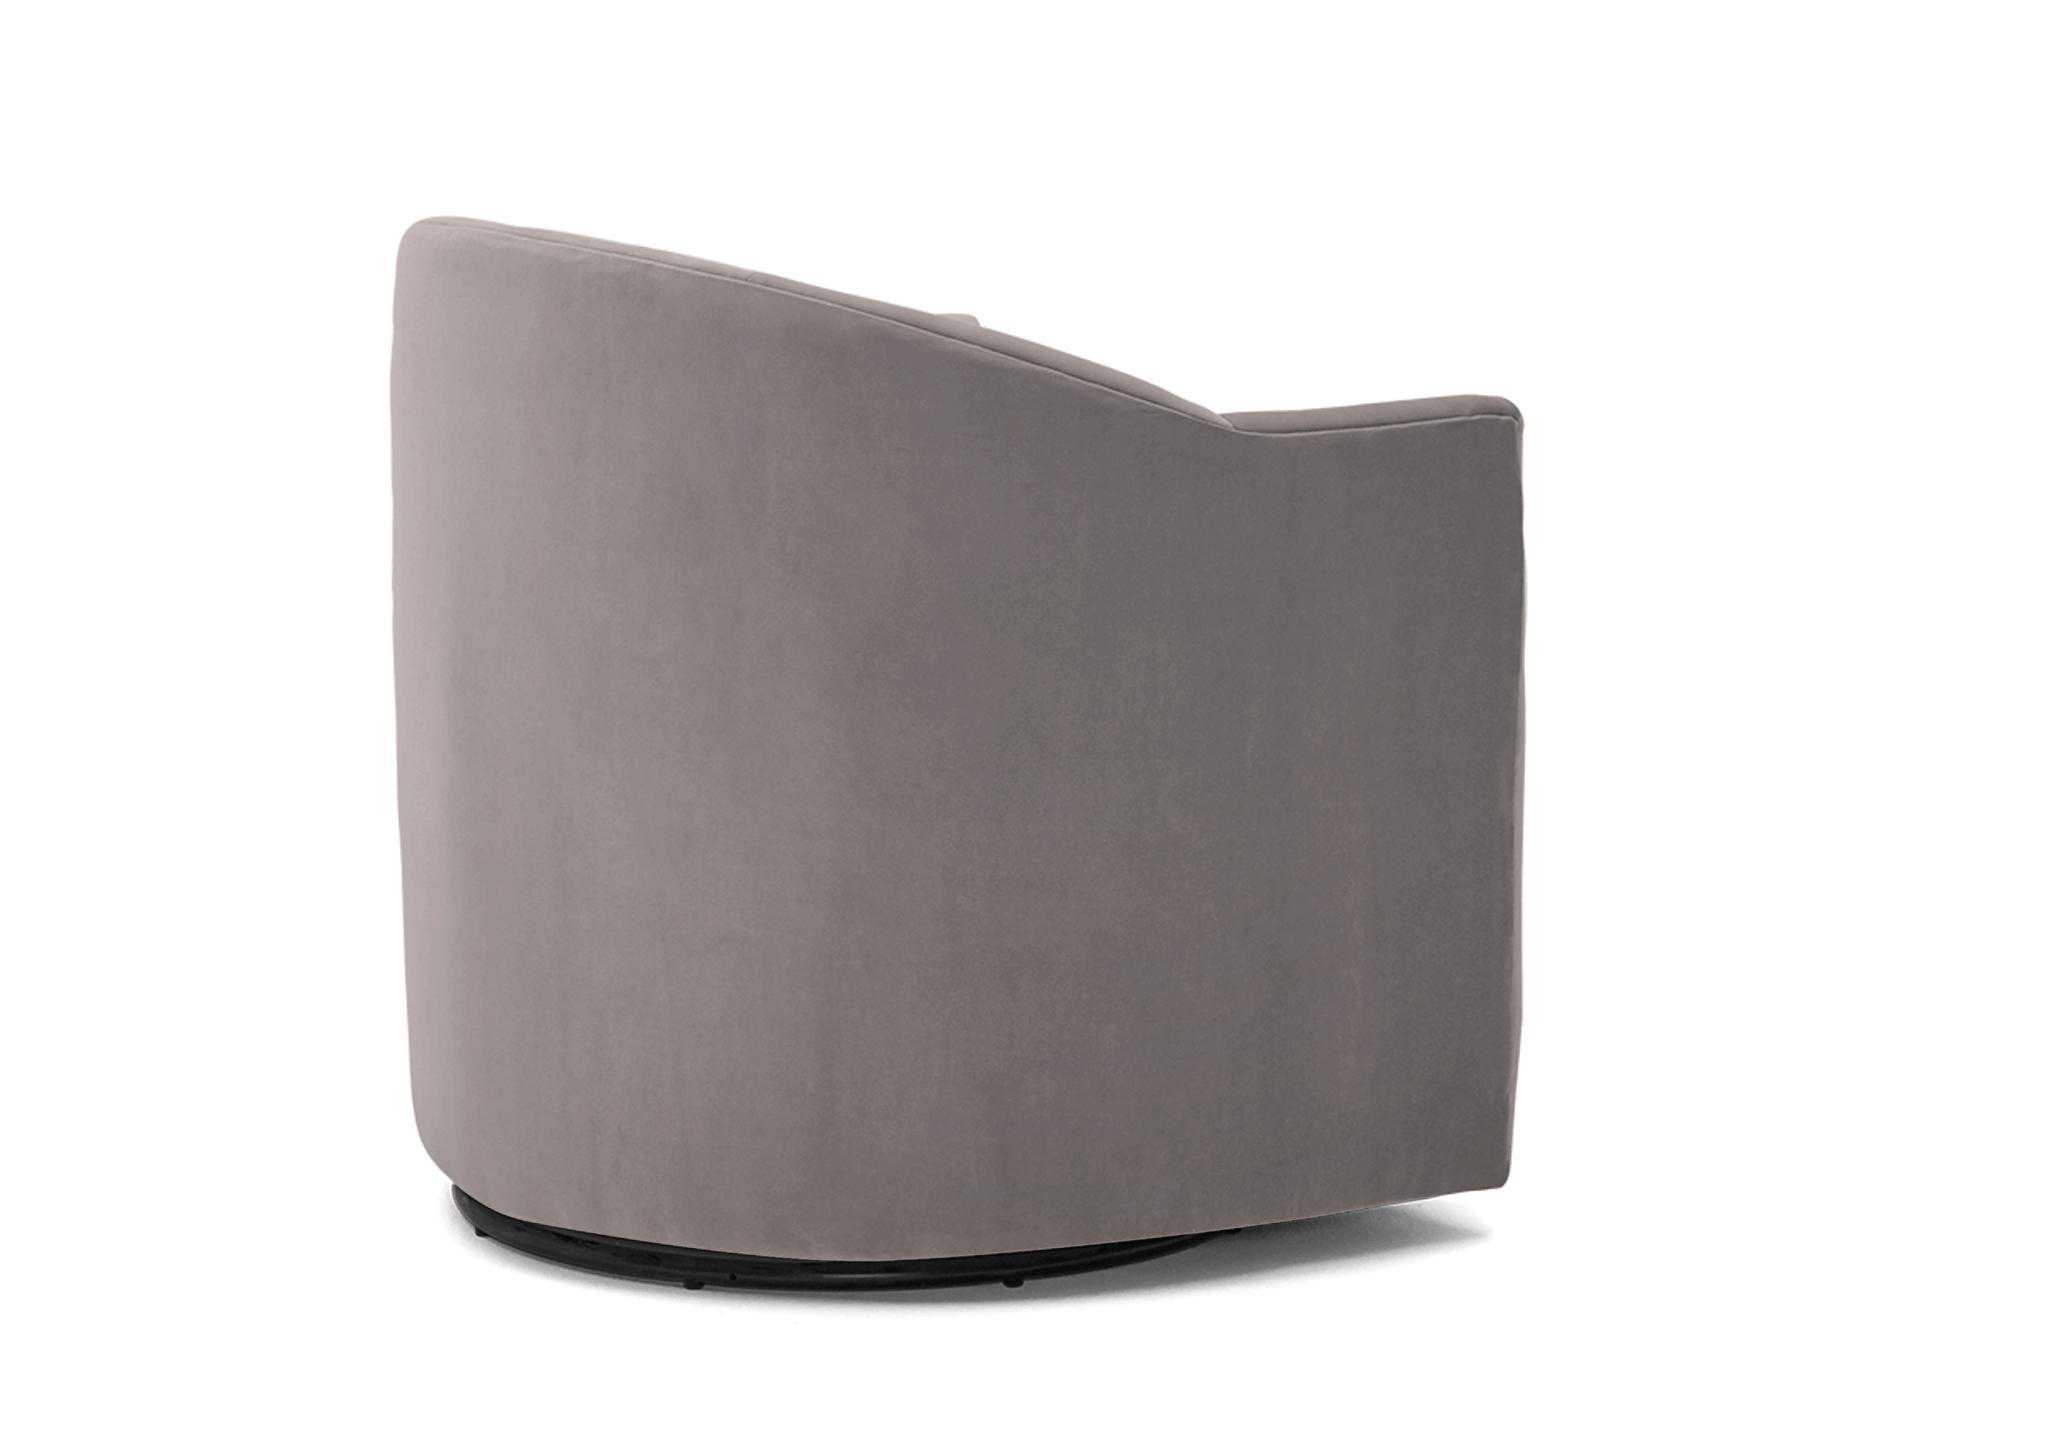 Purple Jolie Mid Century Modern Swivel Chair - Sunbrella Premier Wisteria - Image 2